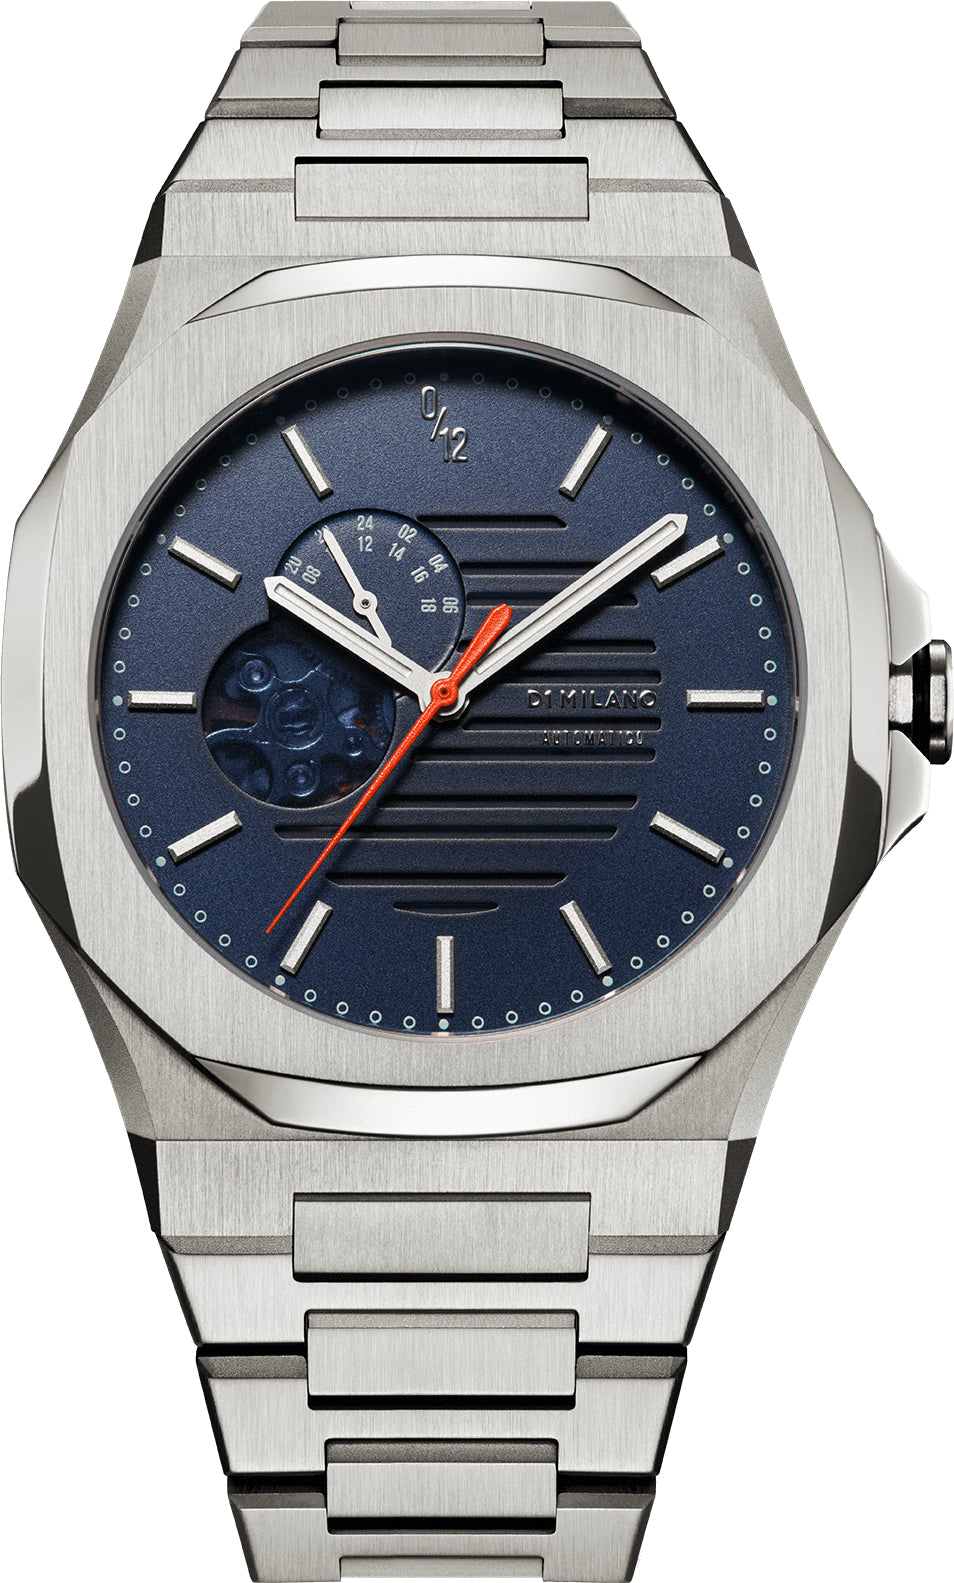 Photos - Wrist Watch Milano D1  Watch Mechanical Automatic - Blue DLM-011 